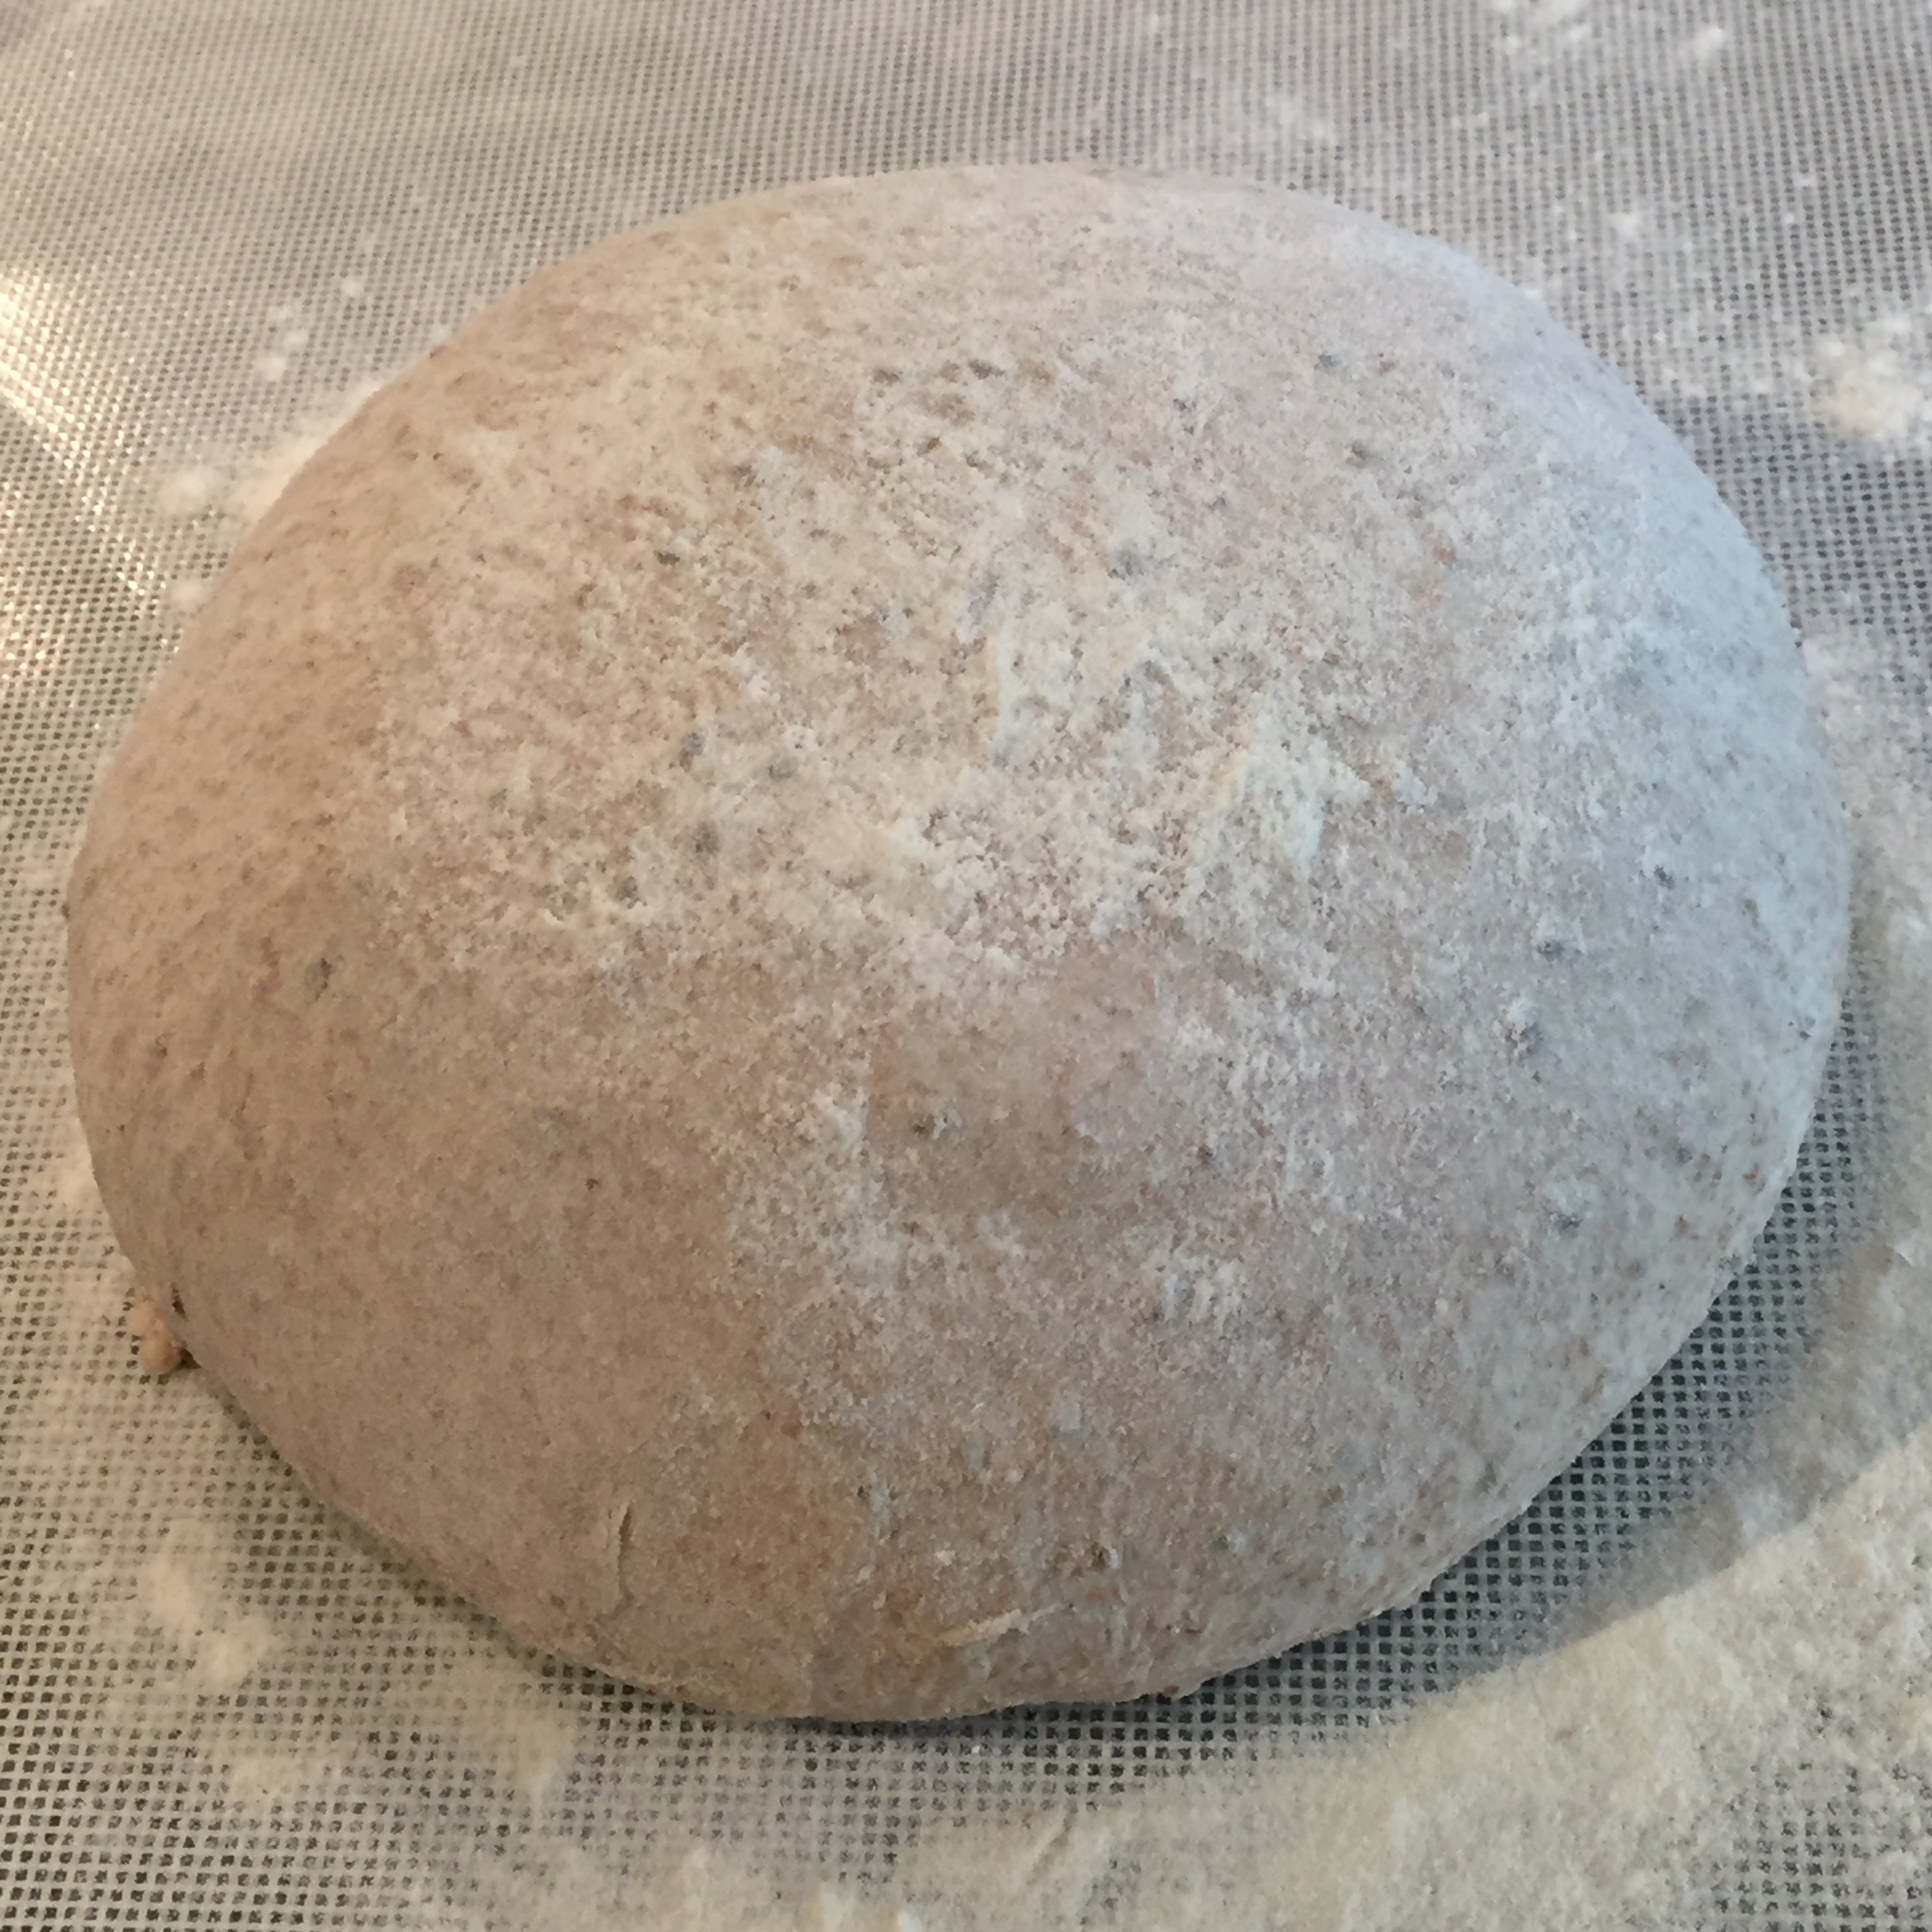 shaped dough, seam up inside the banneton